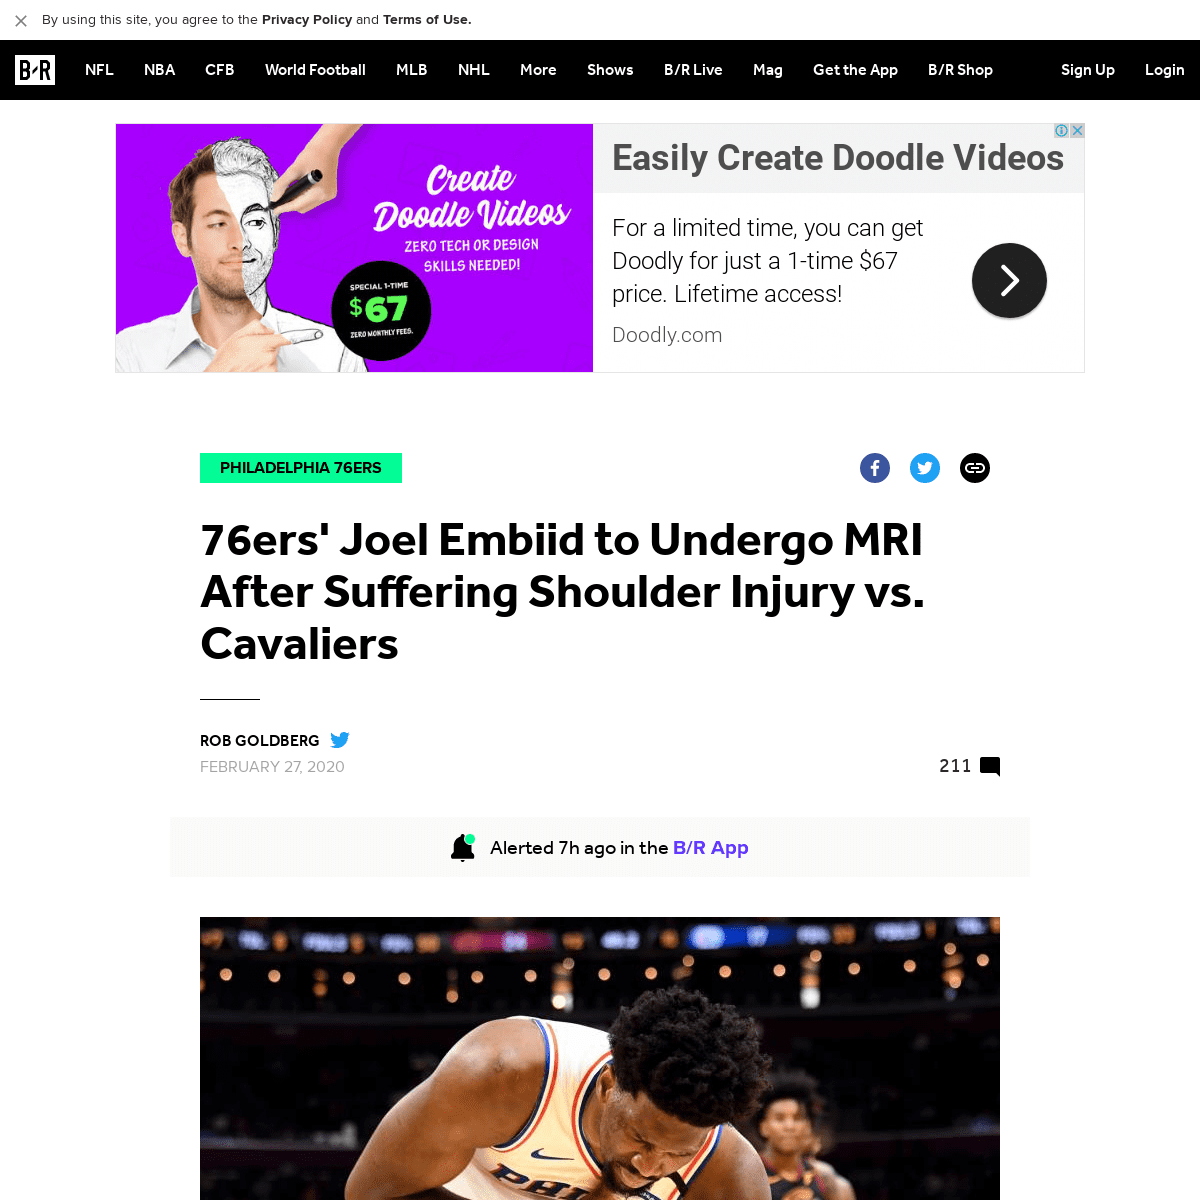 A complete backup of bleacherreport.com/articles/2875489-76ers-joel-embiid-ruled-out-vs-cavaliers-after-suffering-shoulder-injur